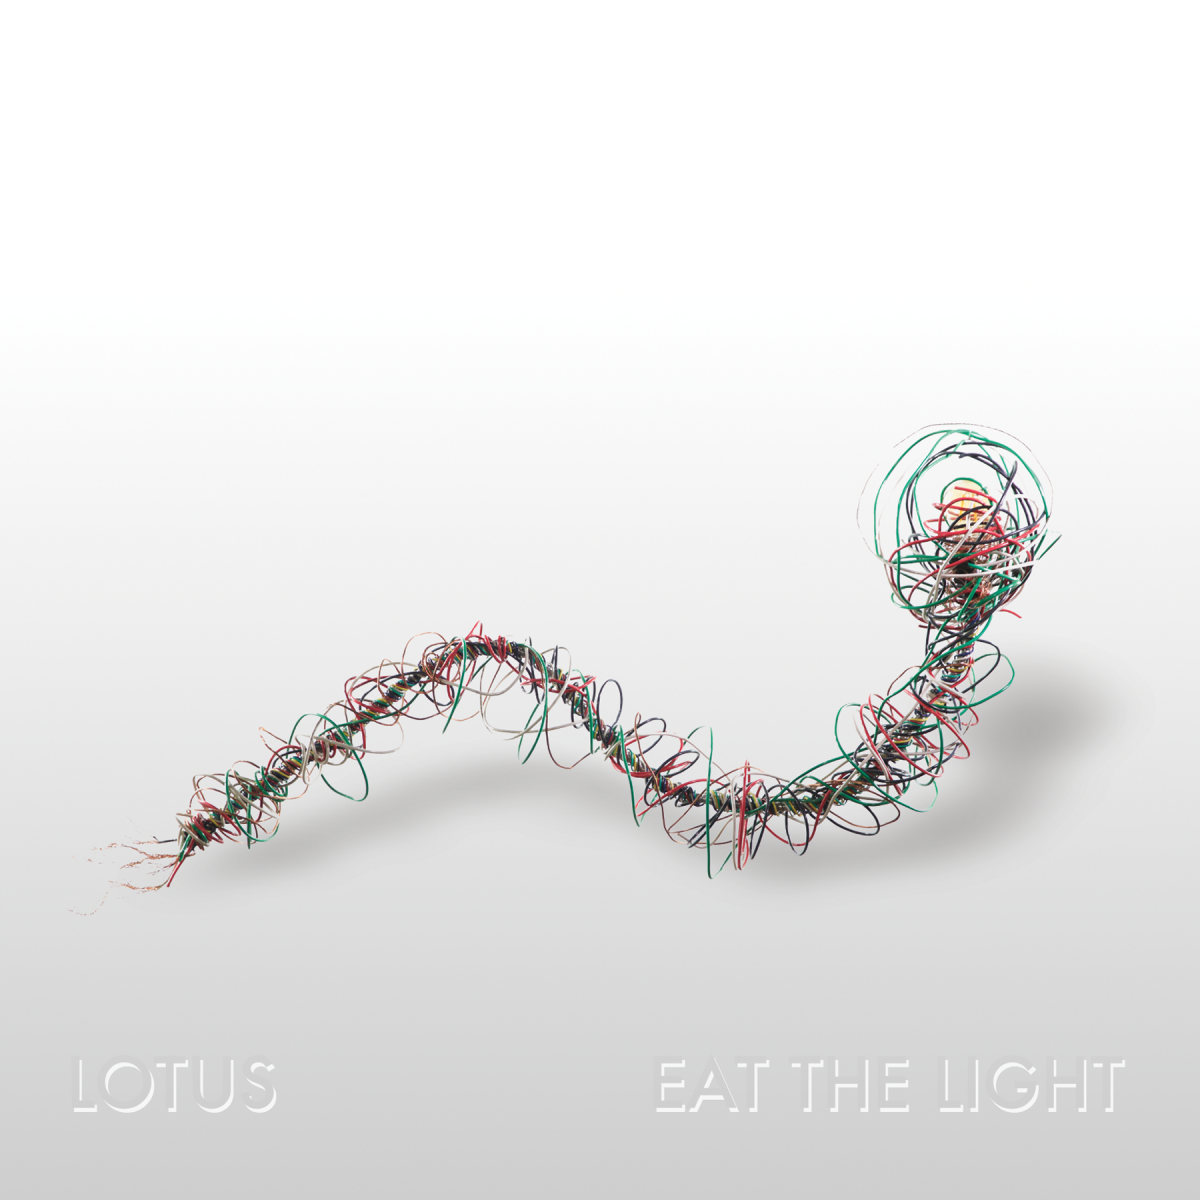 Album Review: Lotus, Eat the Light